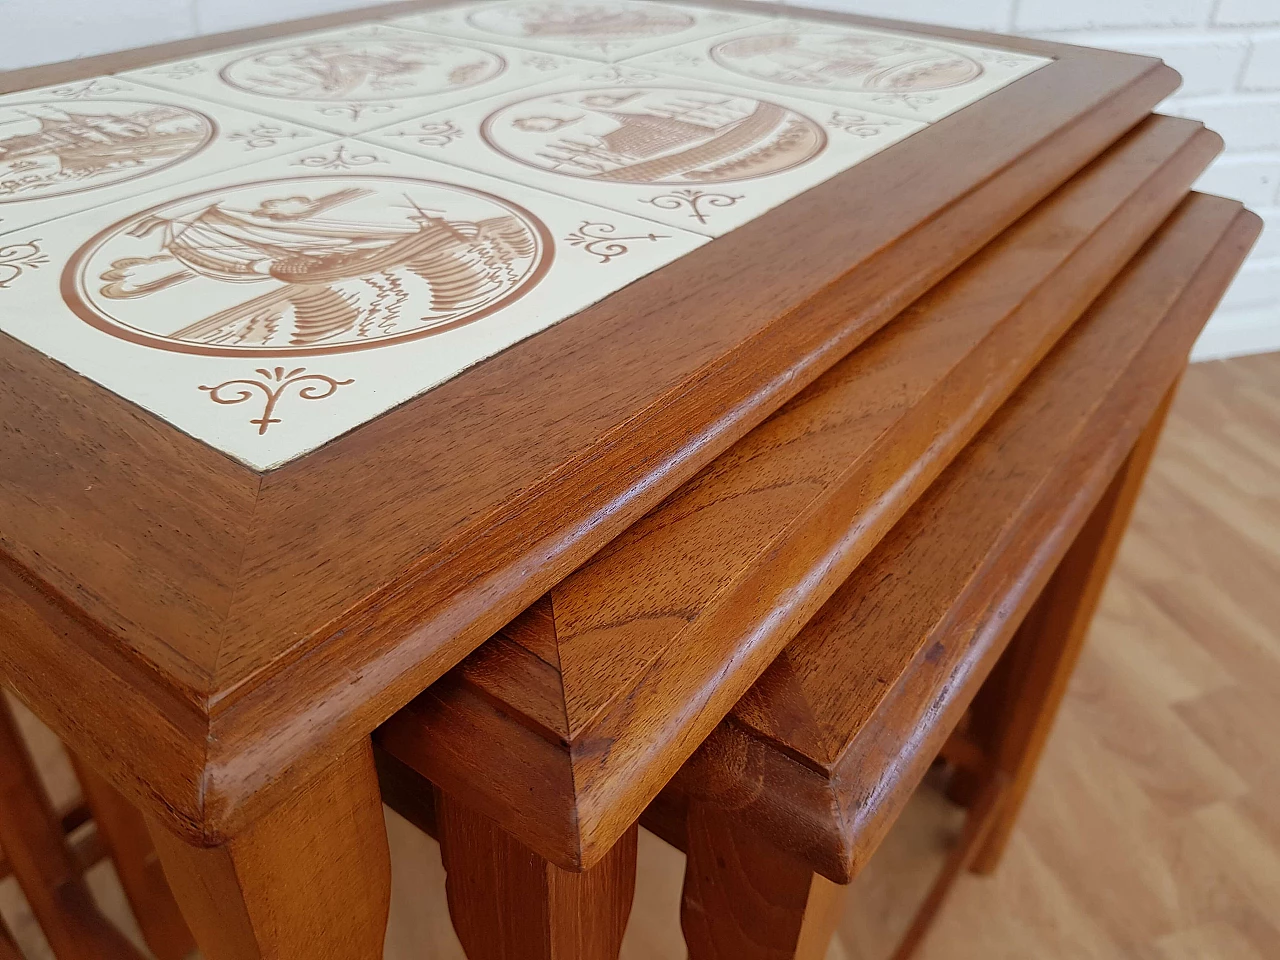 Nesting table, 60s, danish design, hand-painted ceramic tiles, teak wood 1064955